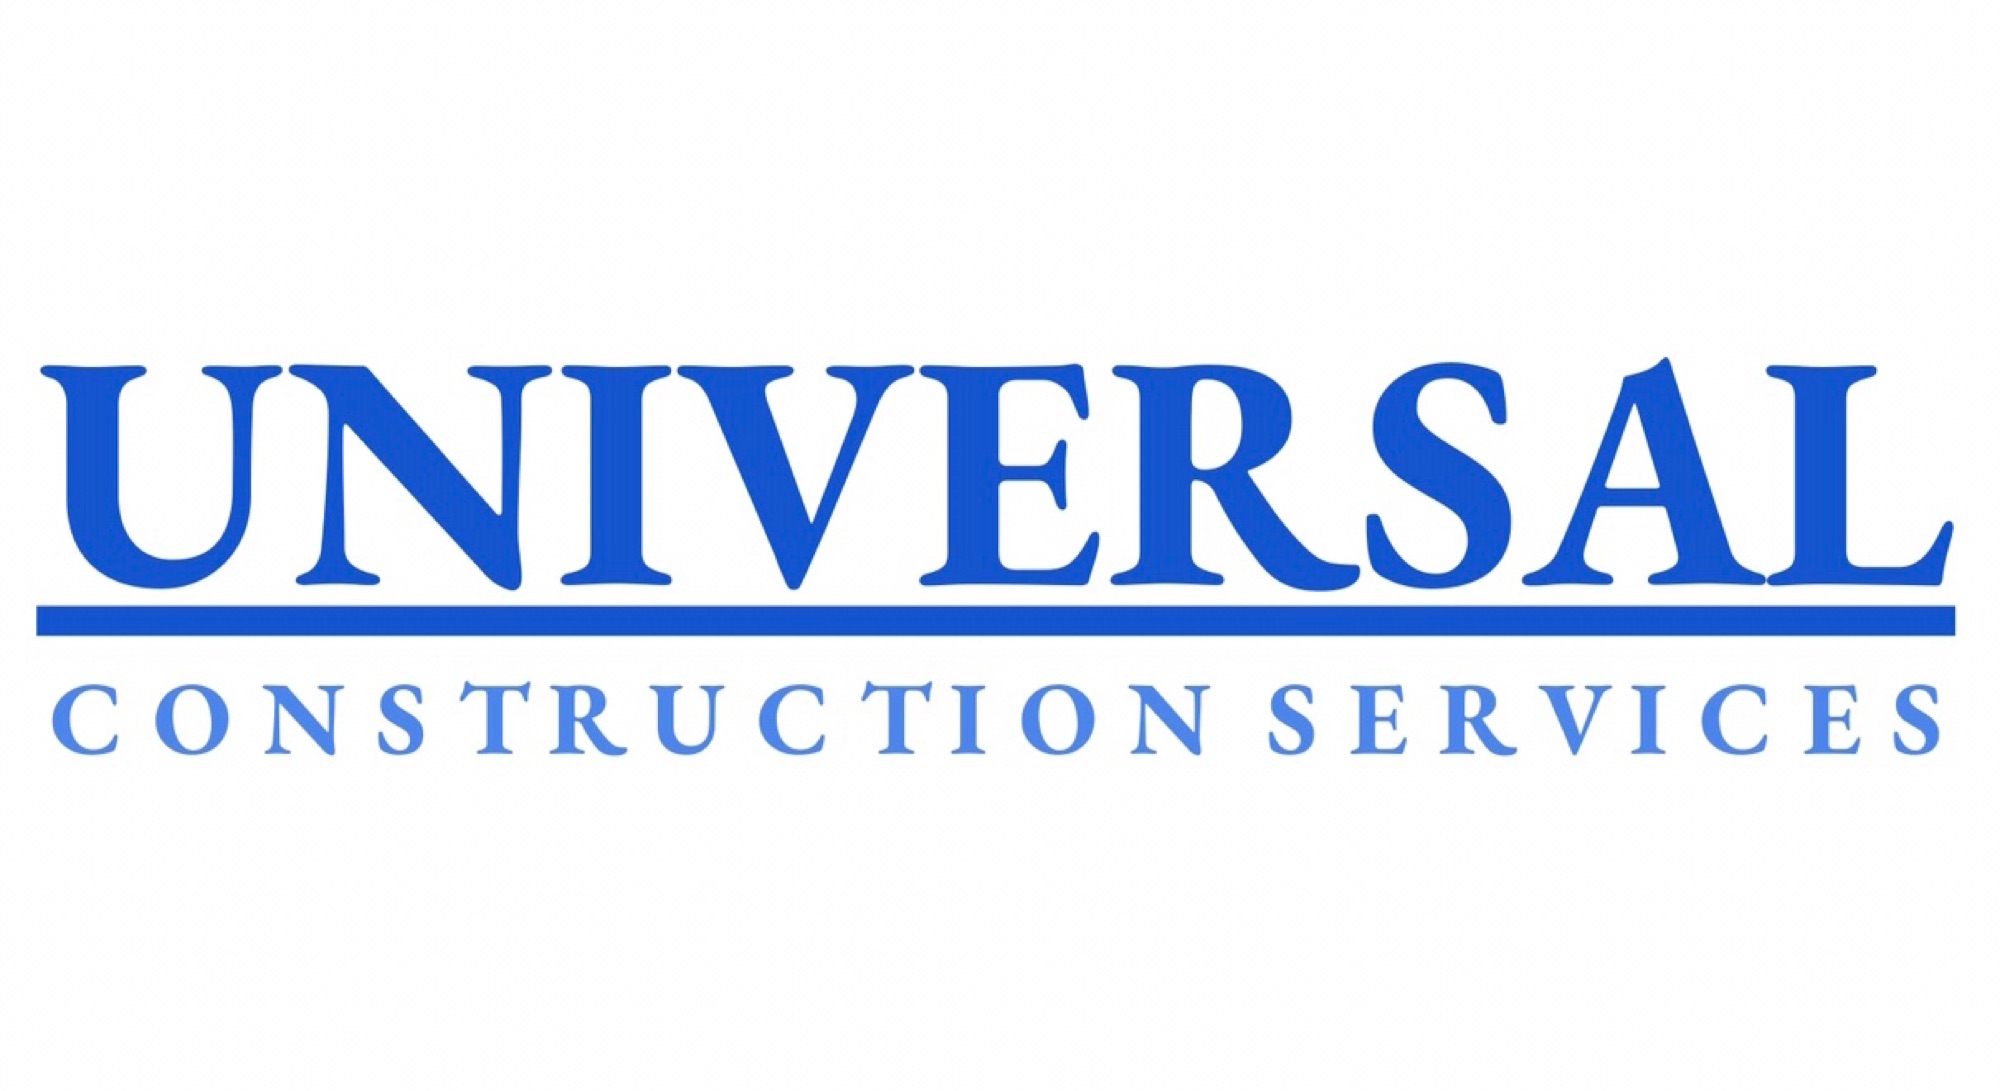 Universal Construction Services, LLC Logo